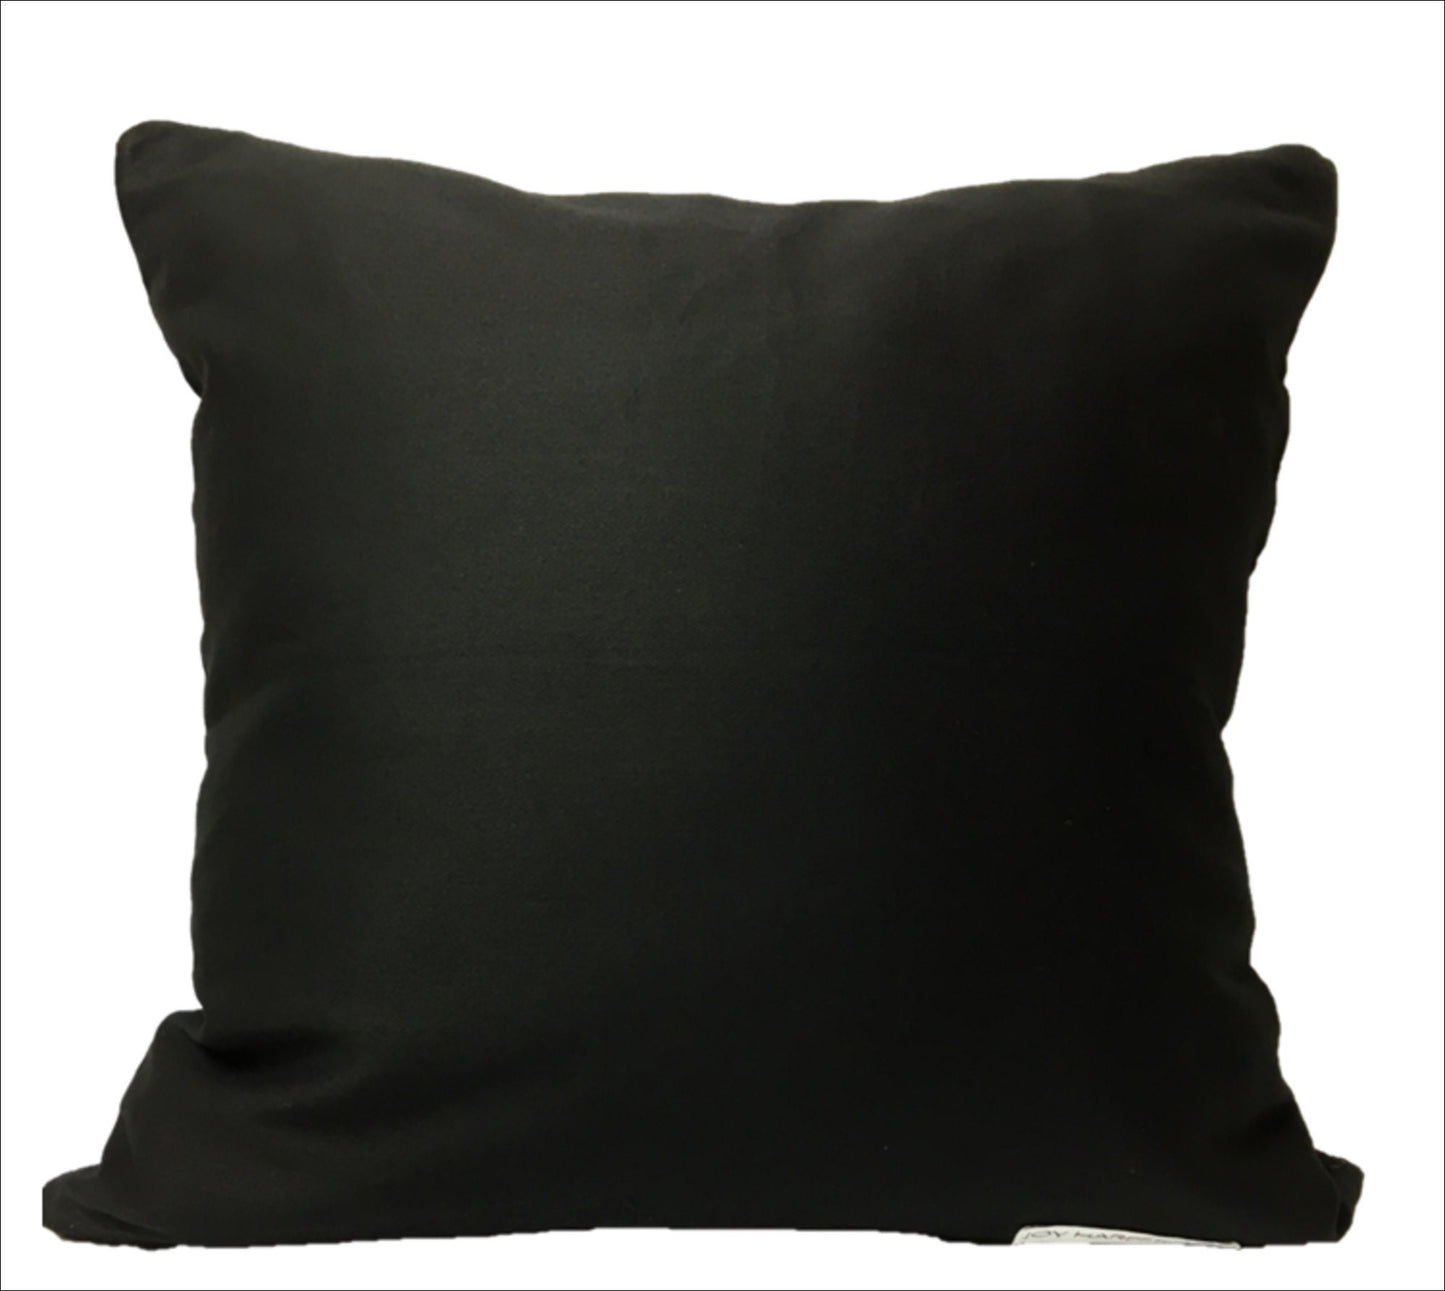 "Black Sequin" | Pillow Cover